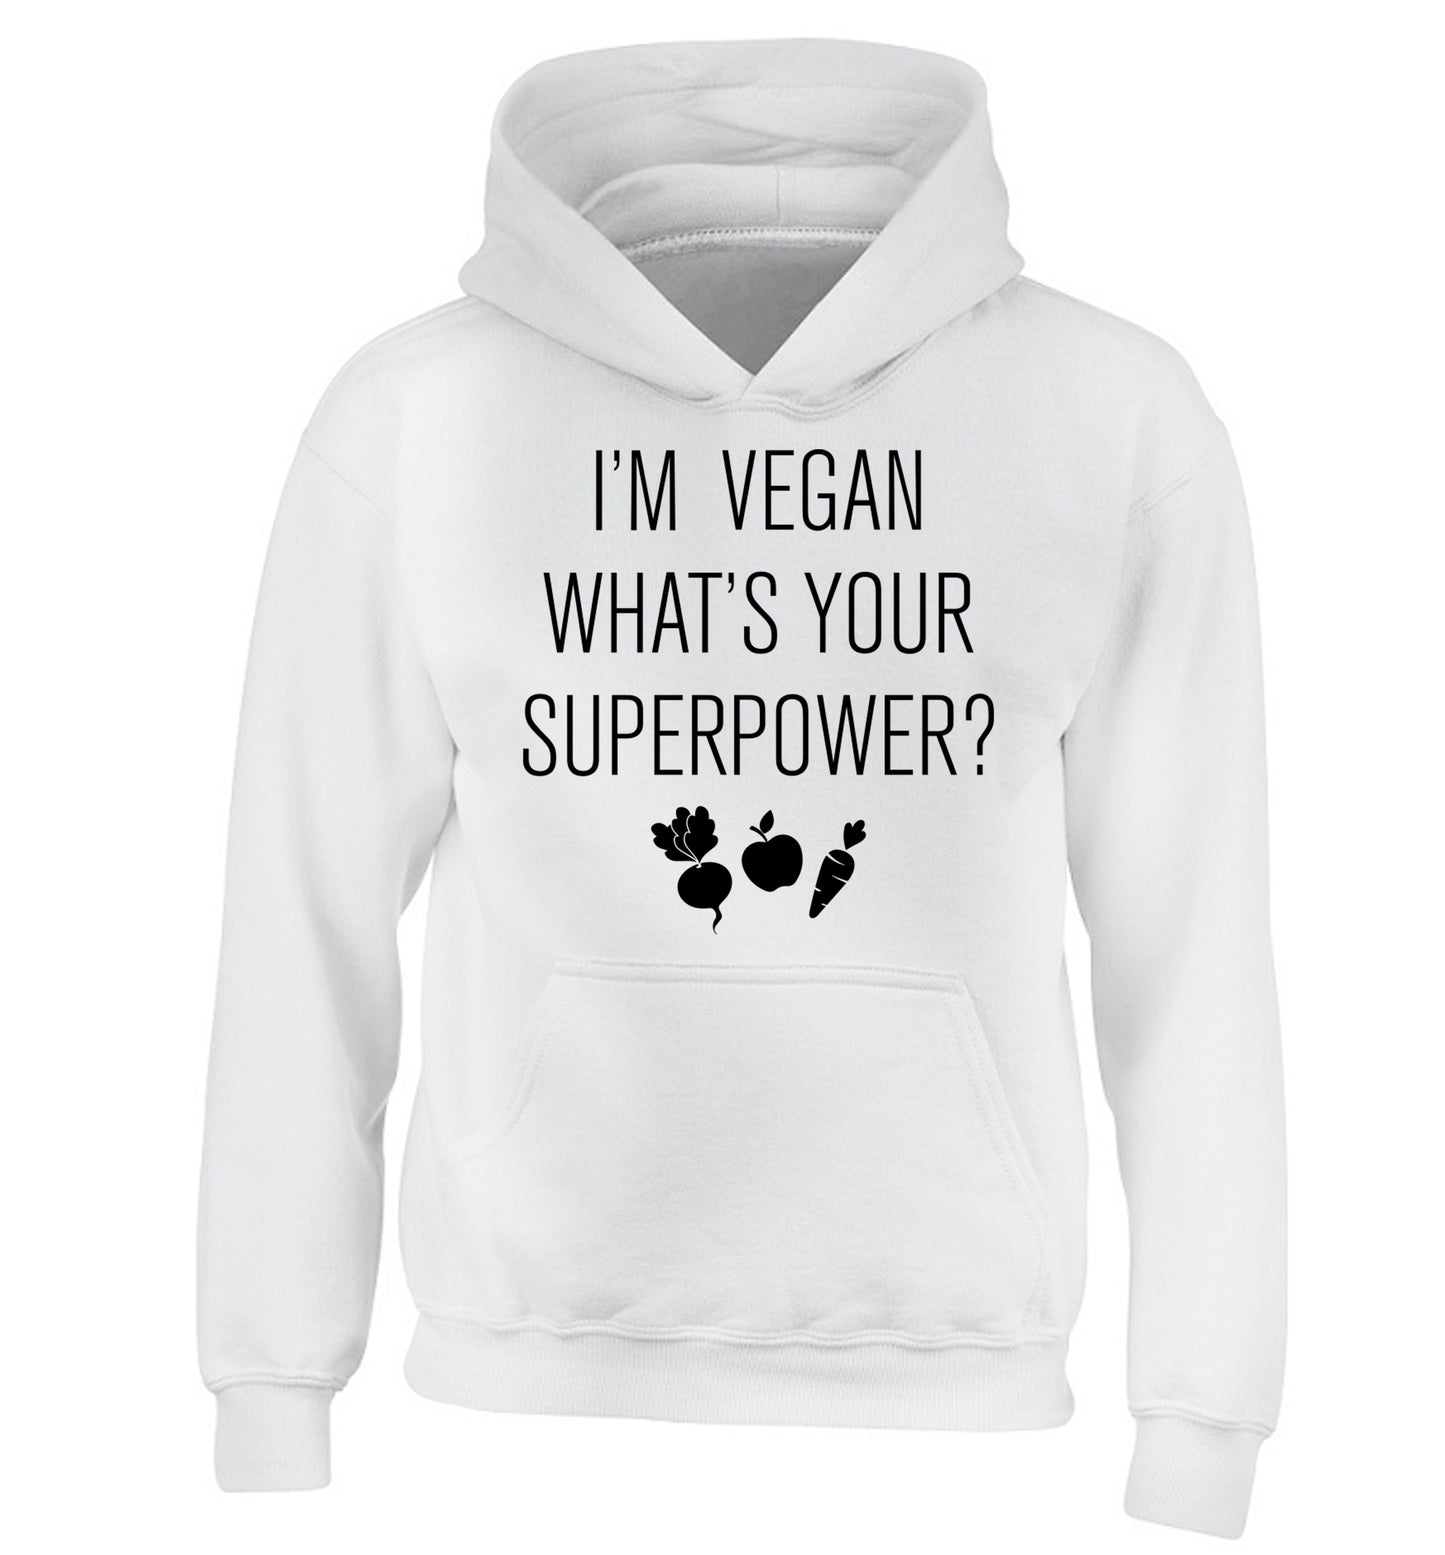 I'm Vegan What's Your Superpower? children's white hoodie 12-13 Years